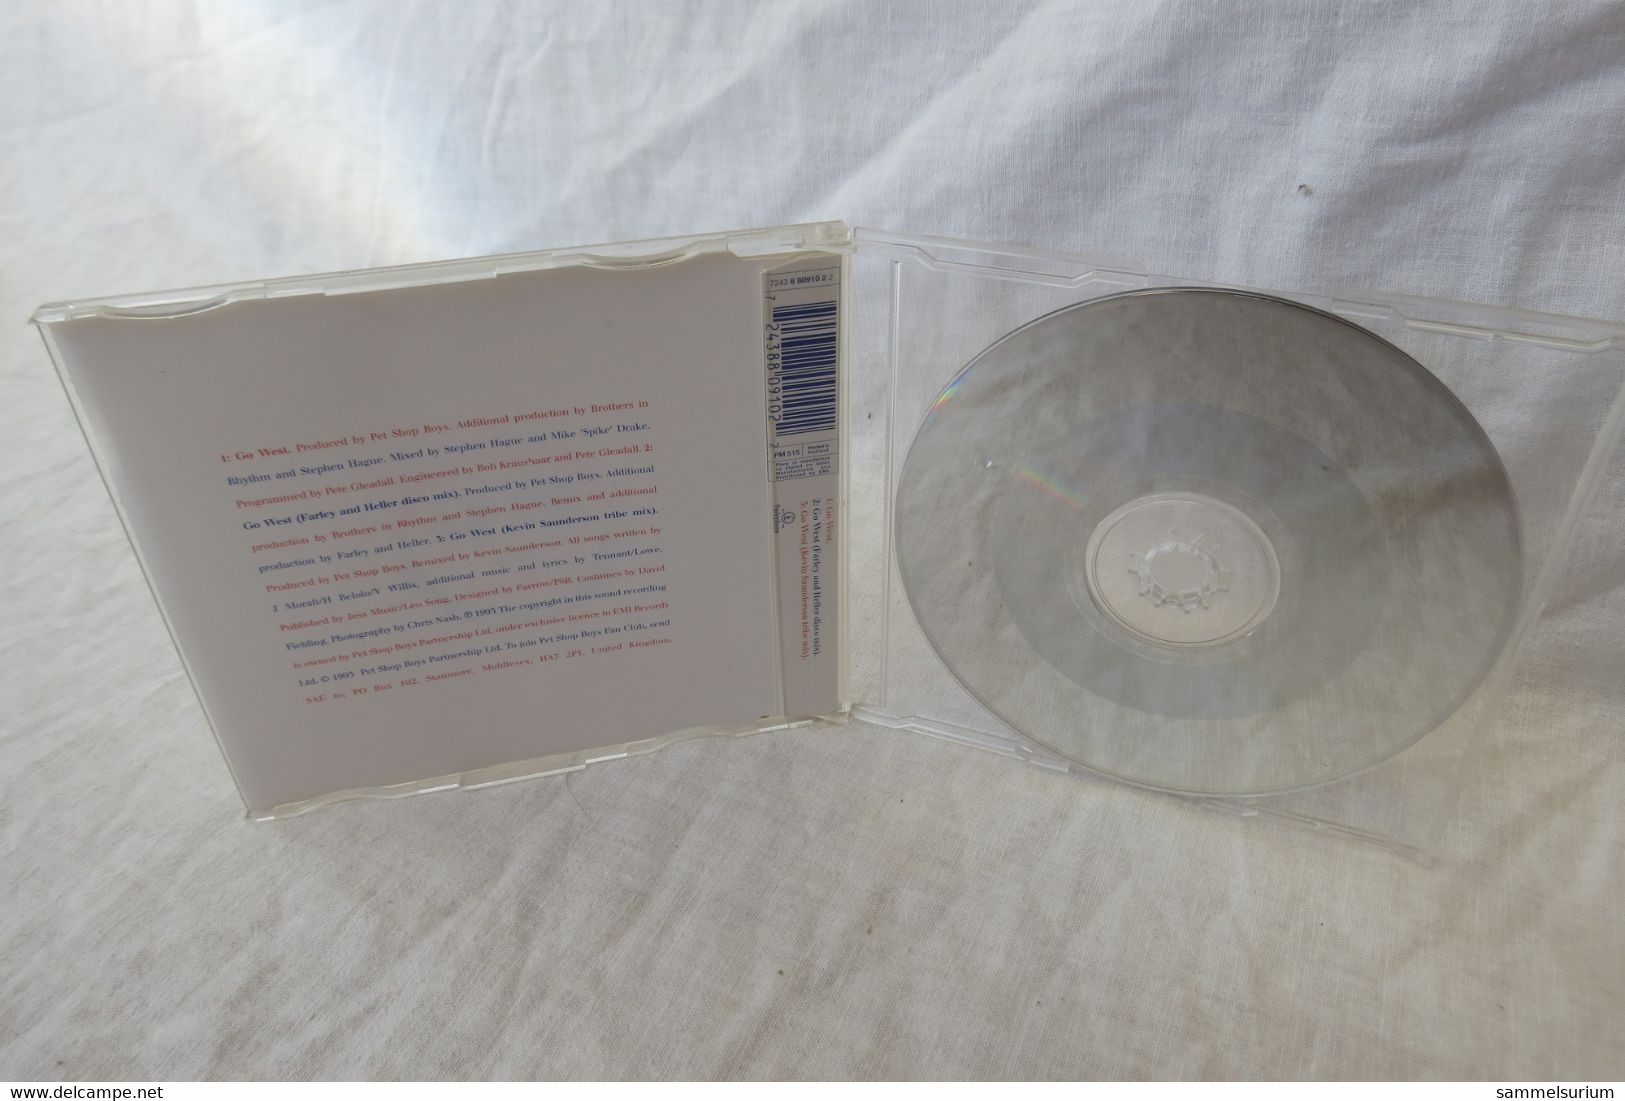 CD "Pet Shop Boys" Go West - Collector's Editions